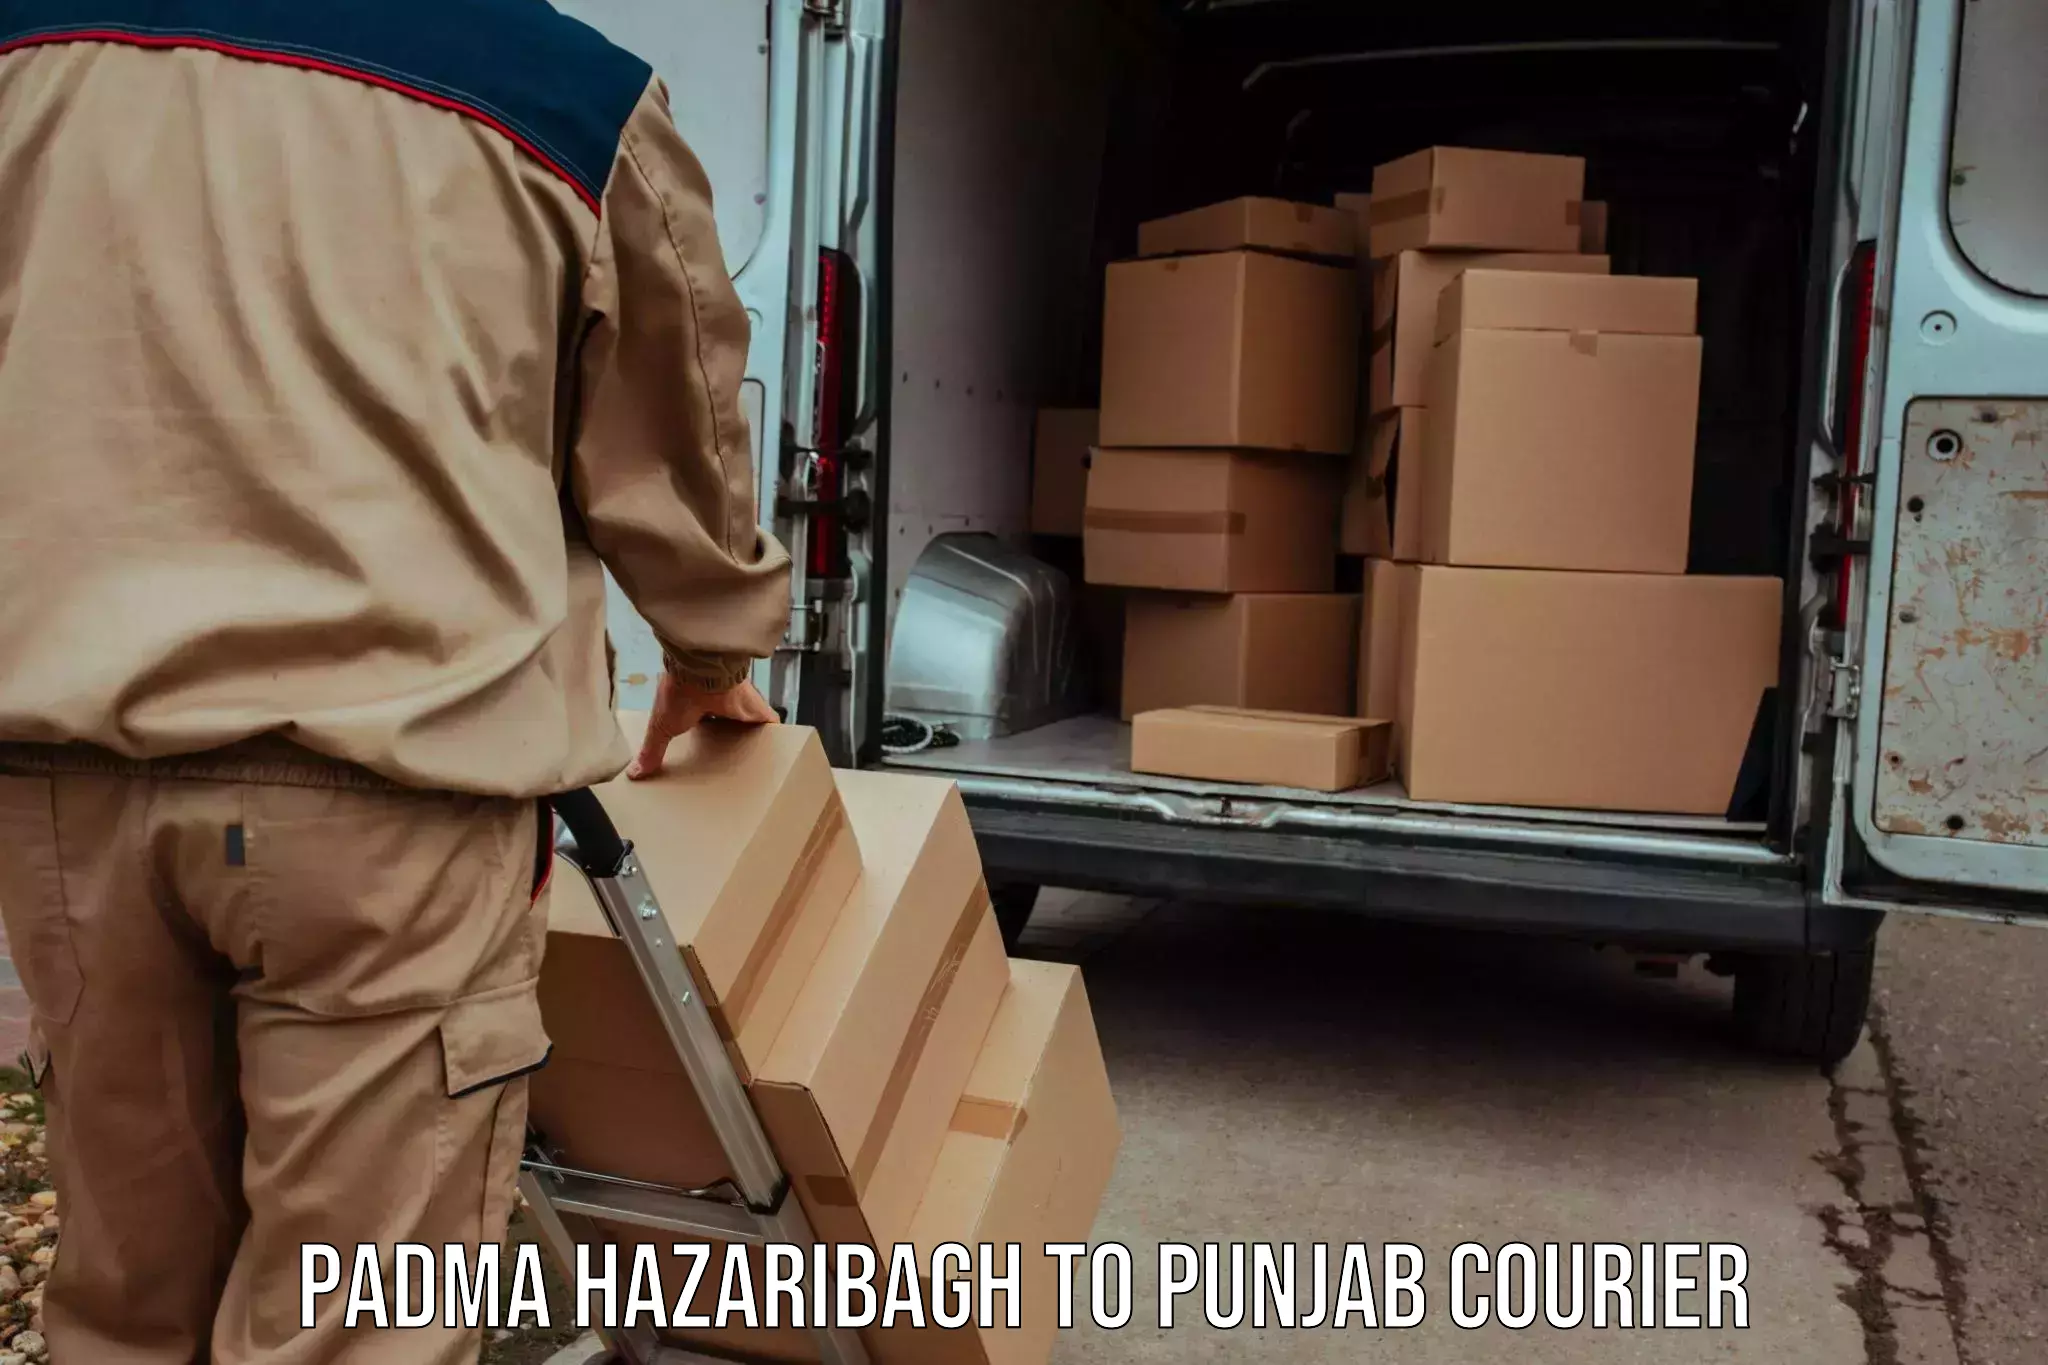 High-priority parcel service Padma Hazaribagh to Dhilwan